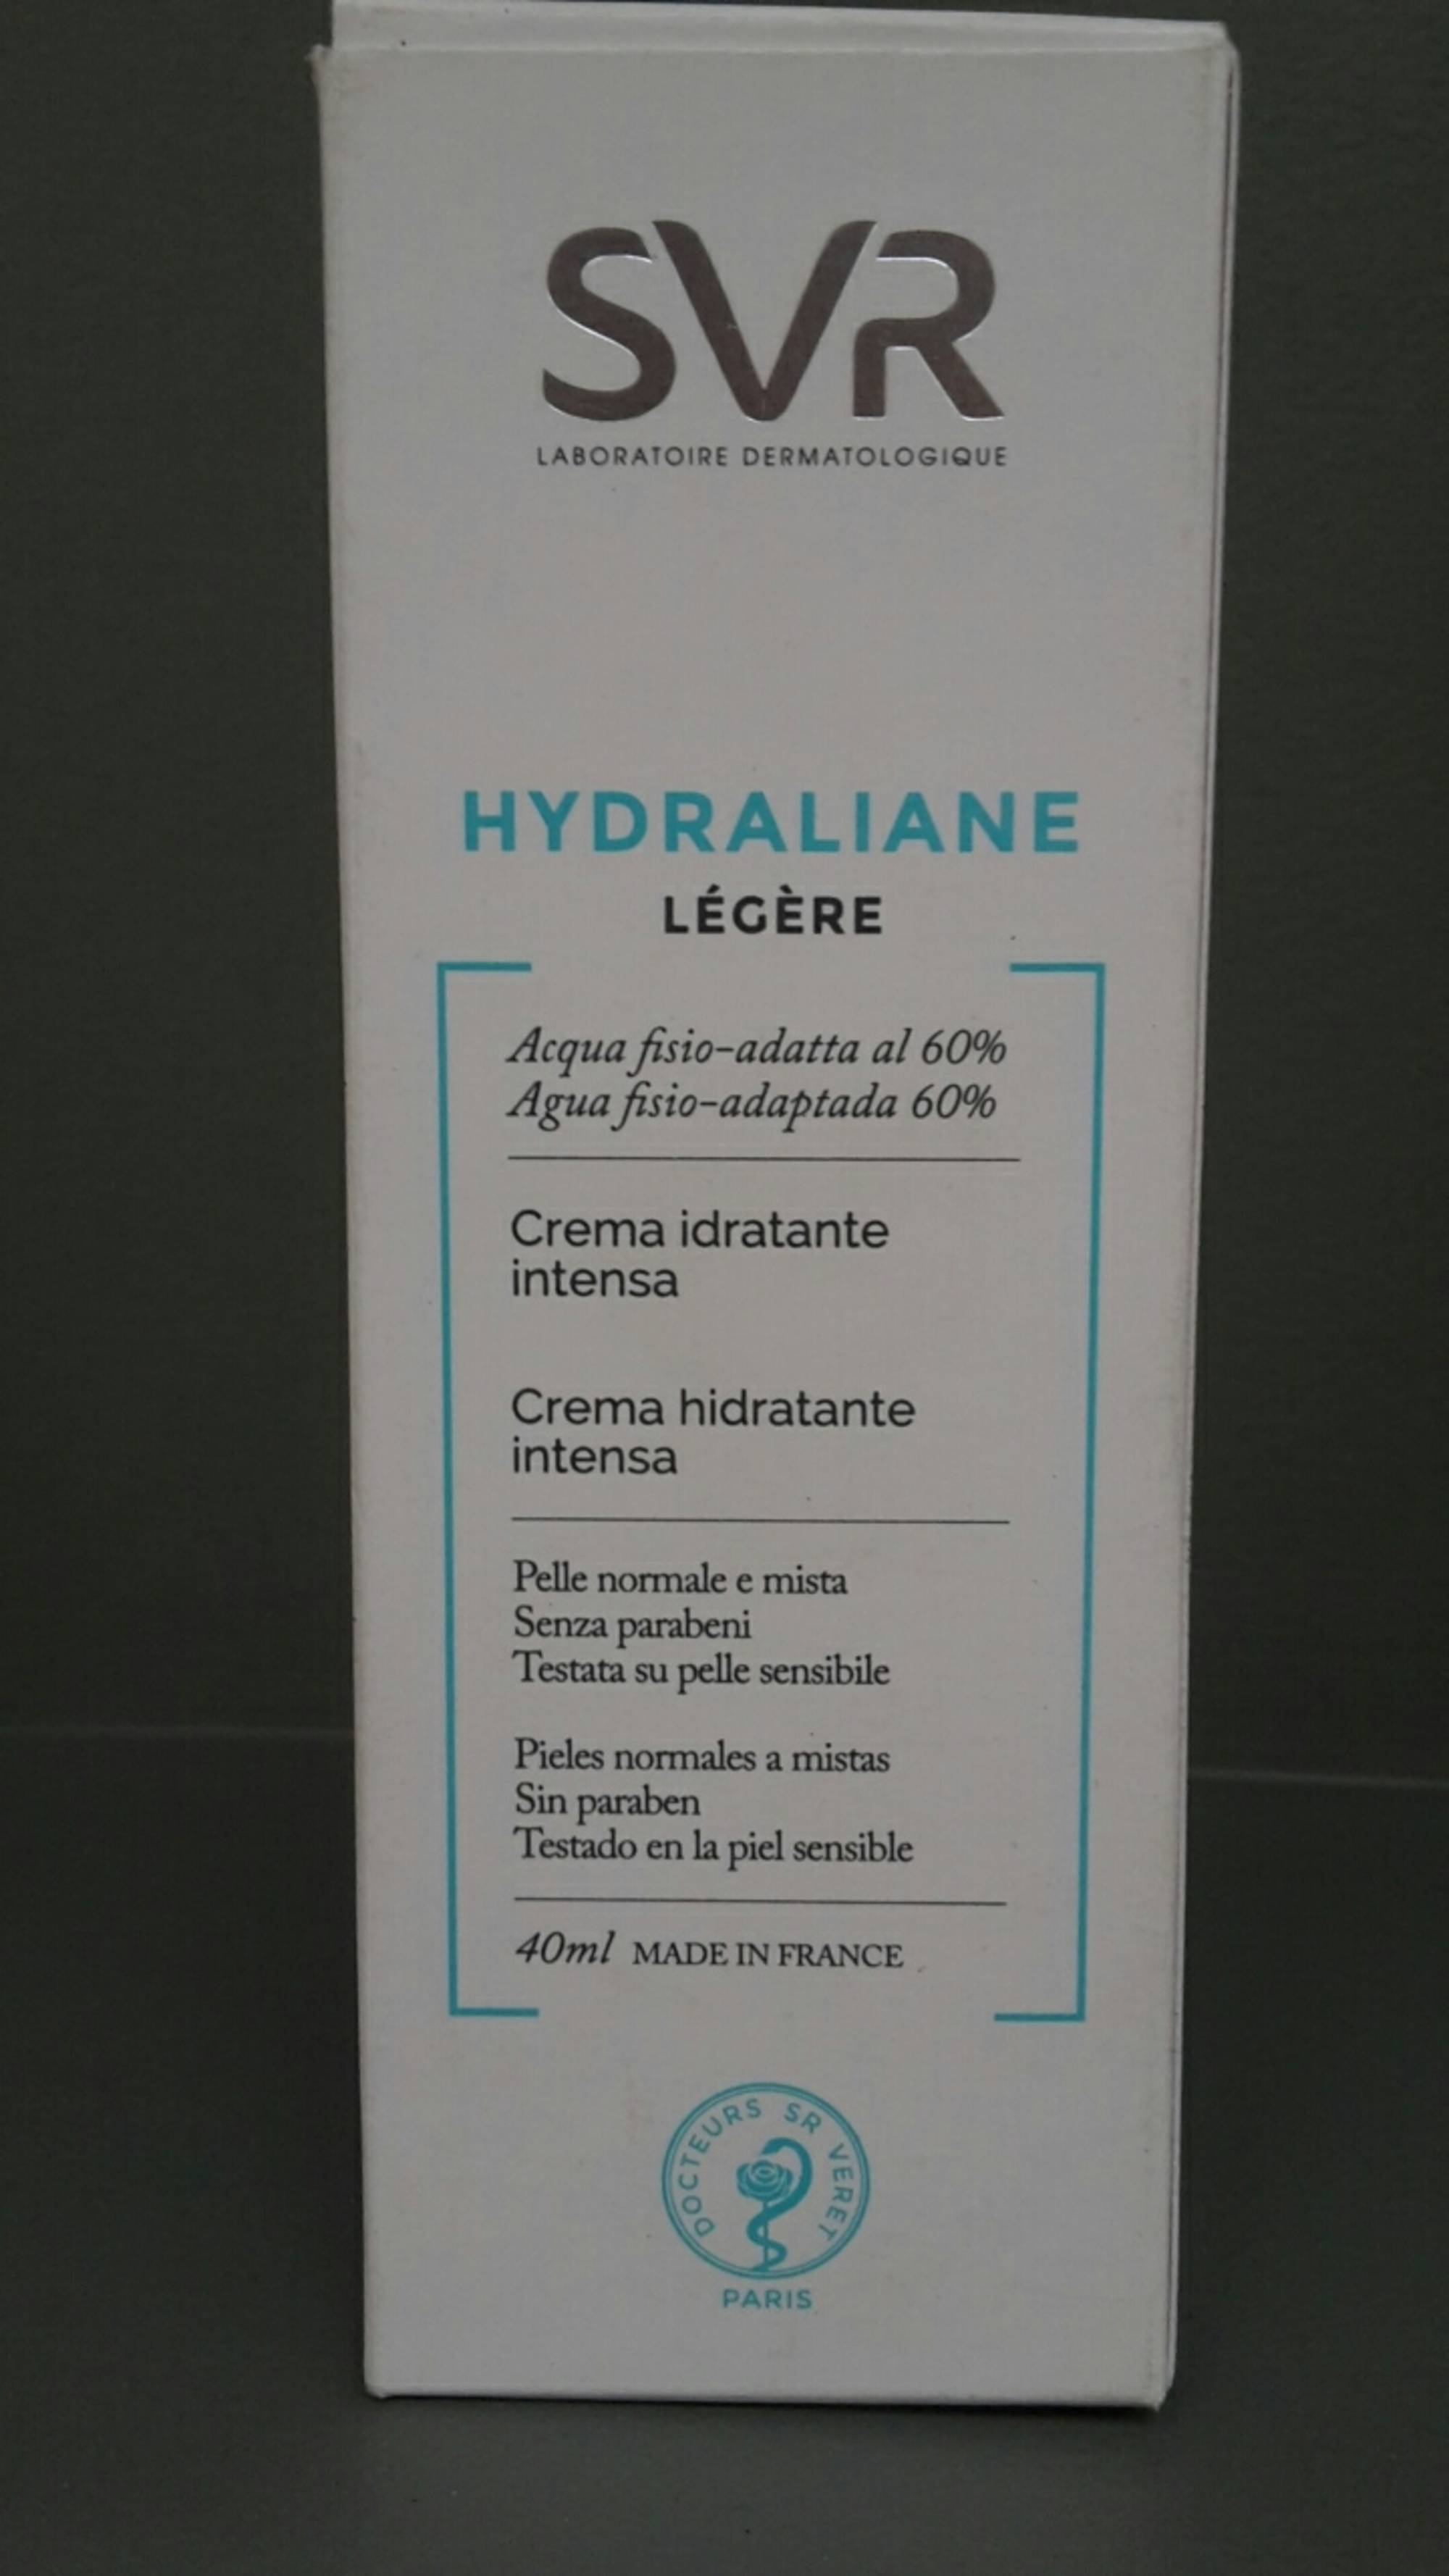 SVR HYDRALIANE Légère Crème hydratante intense 40ml 